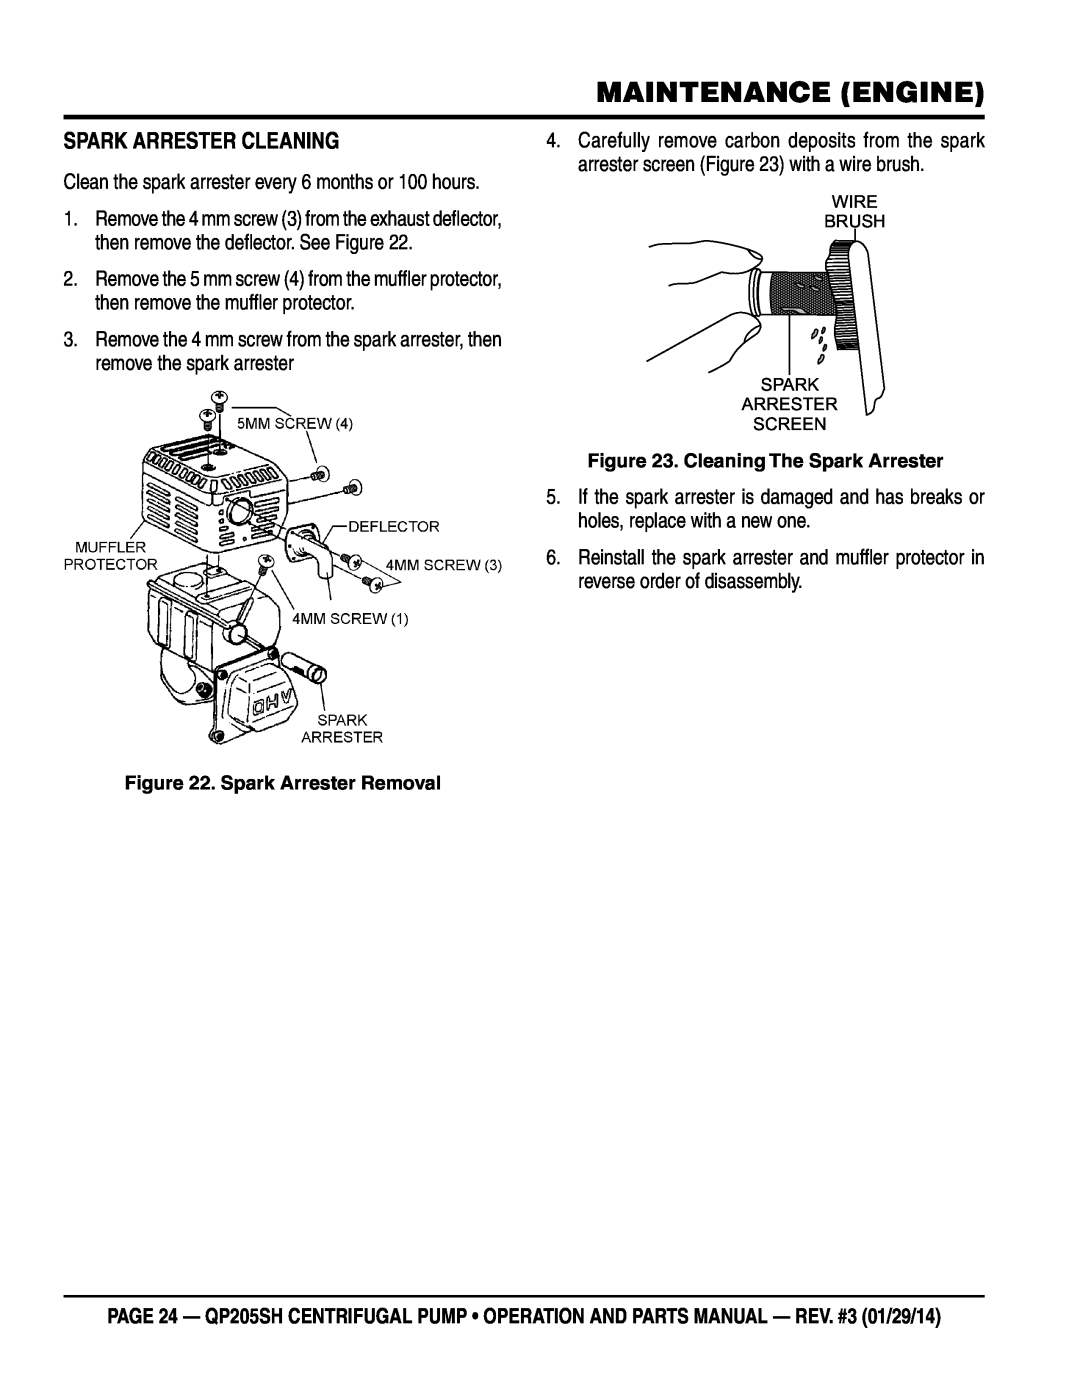 Honda Power Equipment QP205SH manual Spark Arrester Cleaning, Maintenance Engine, Spark Arrester Removal 